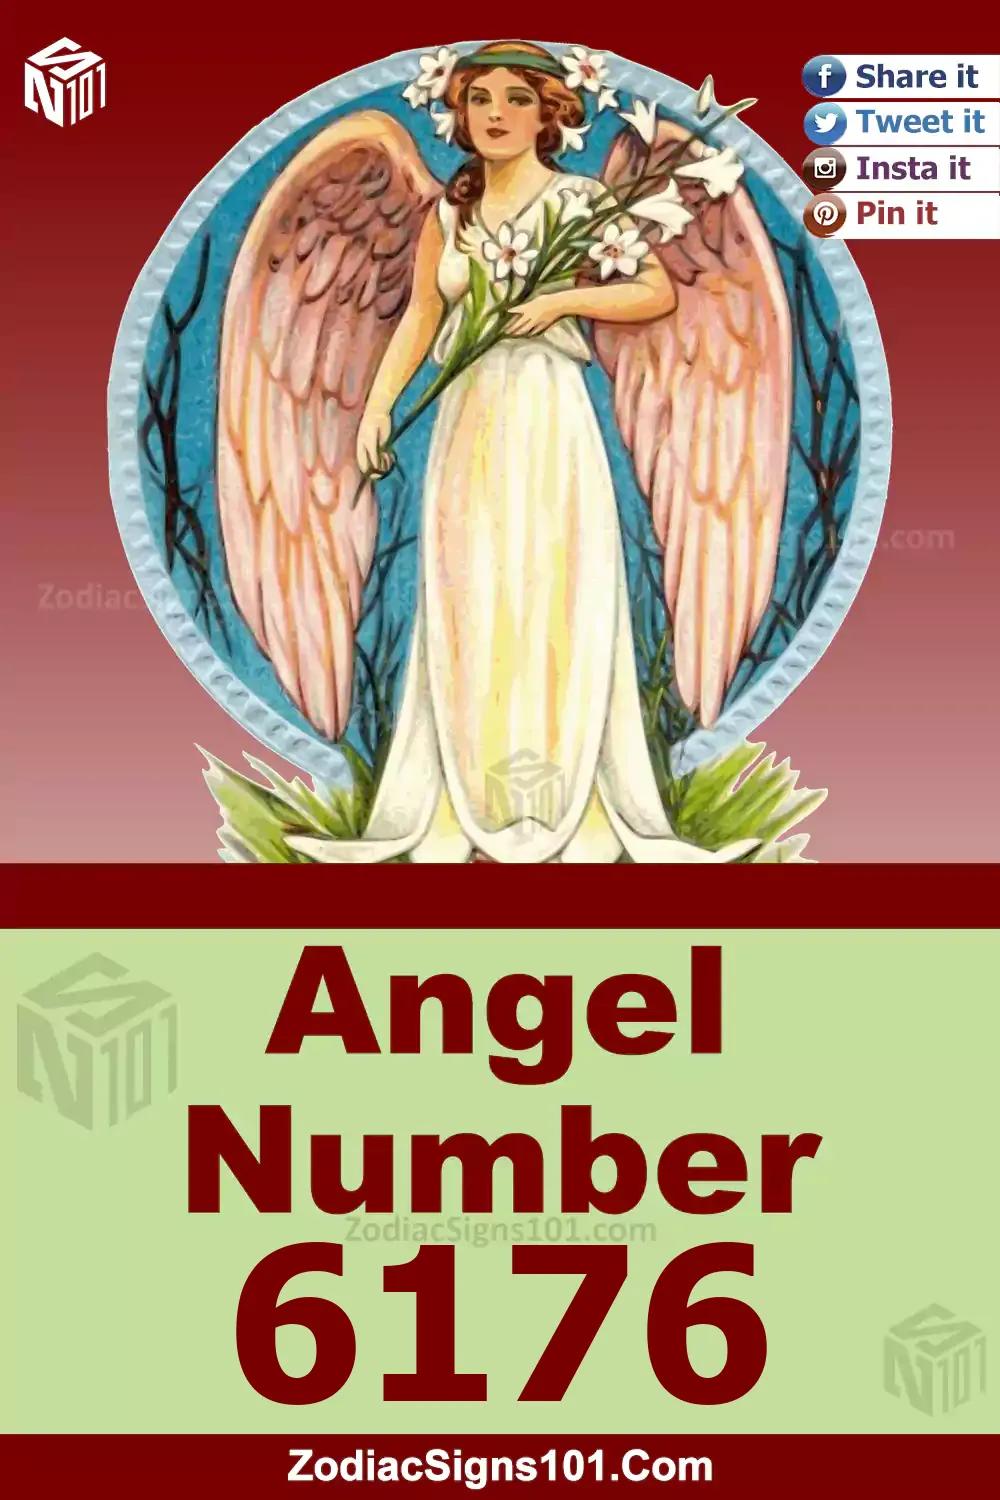 6176-Angel-Number-Meaning.jpg